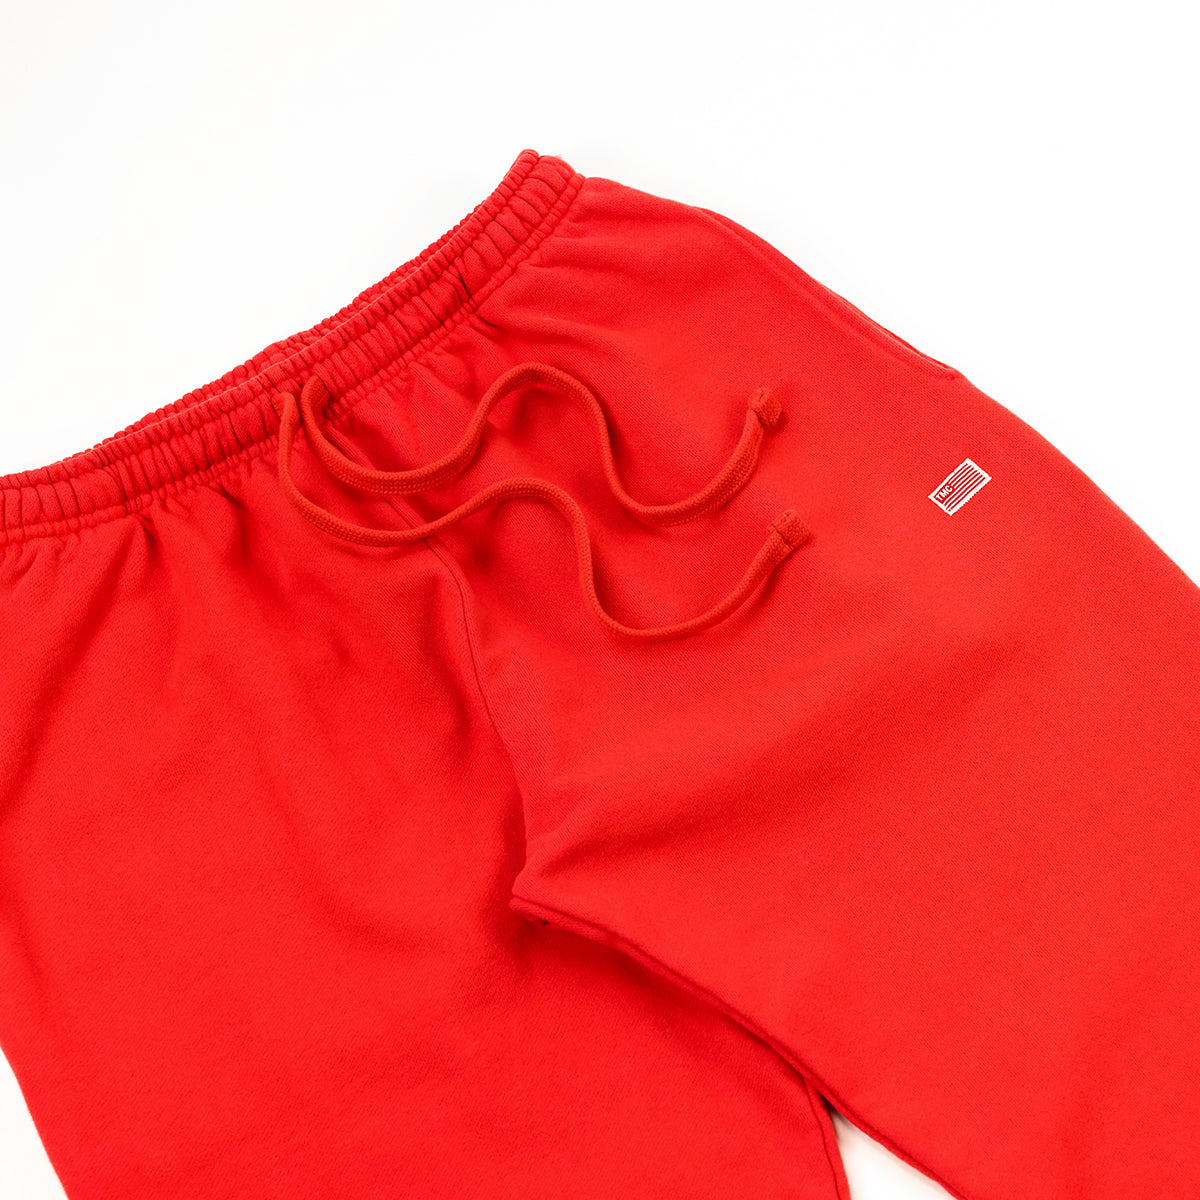 TMC Flag Pants - Red - Detail